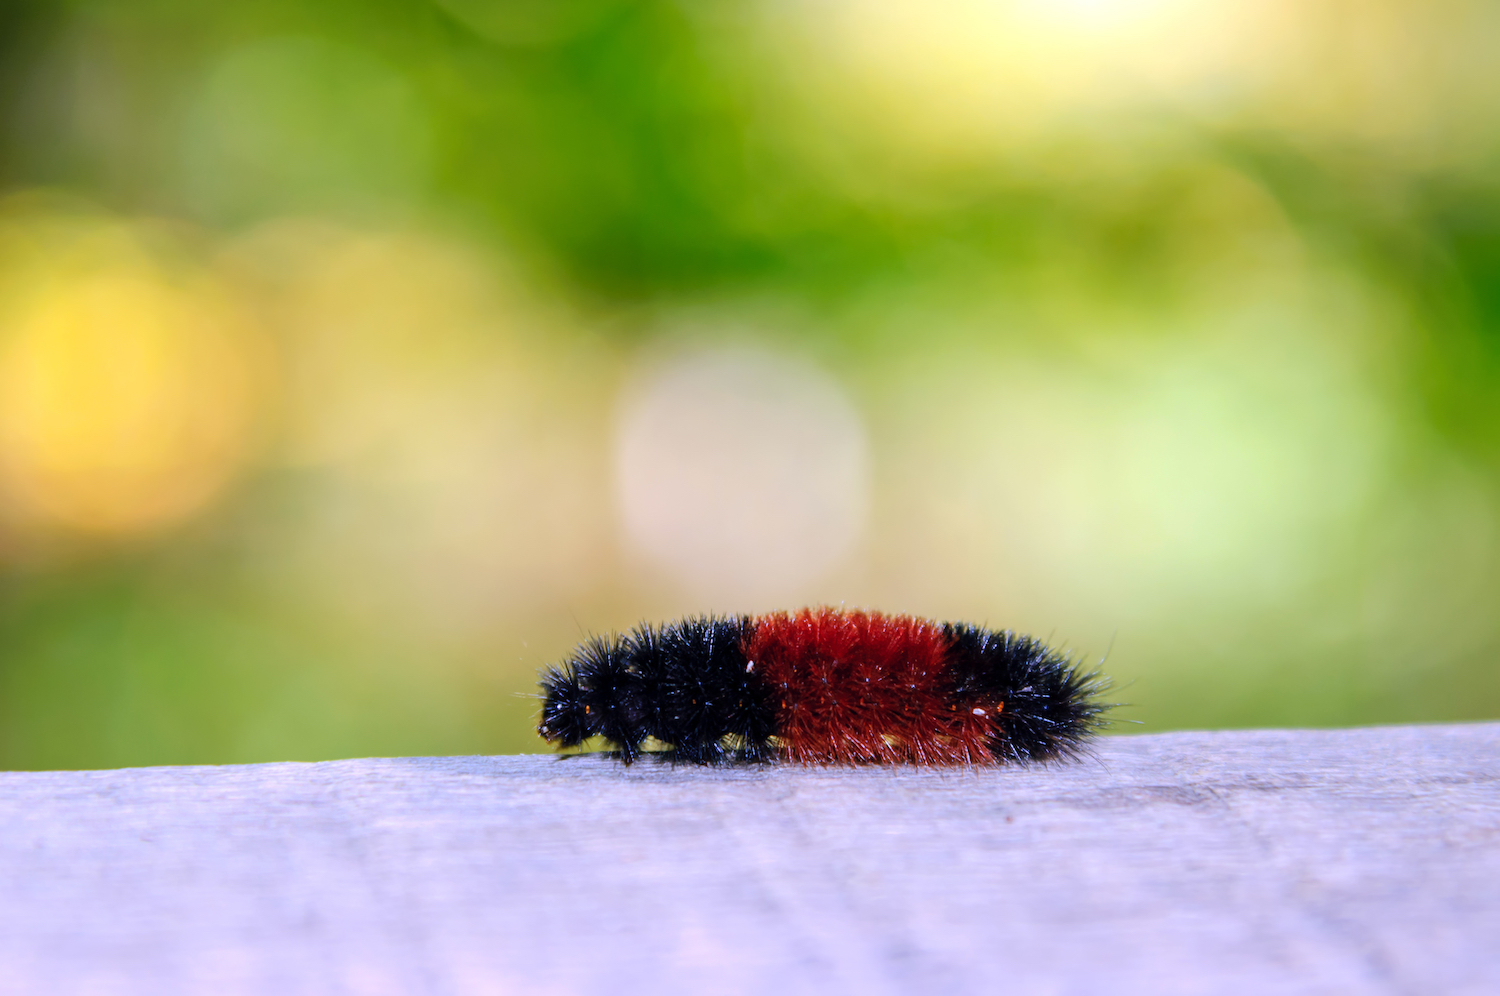 A woolly bear caterpillar walking on the ground